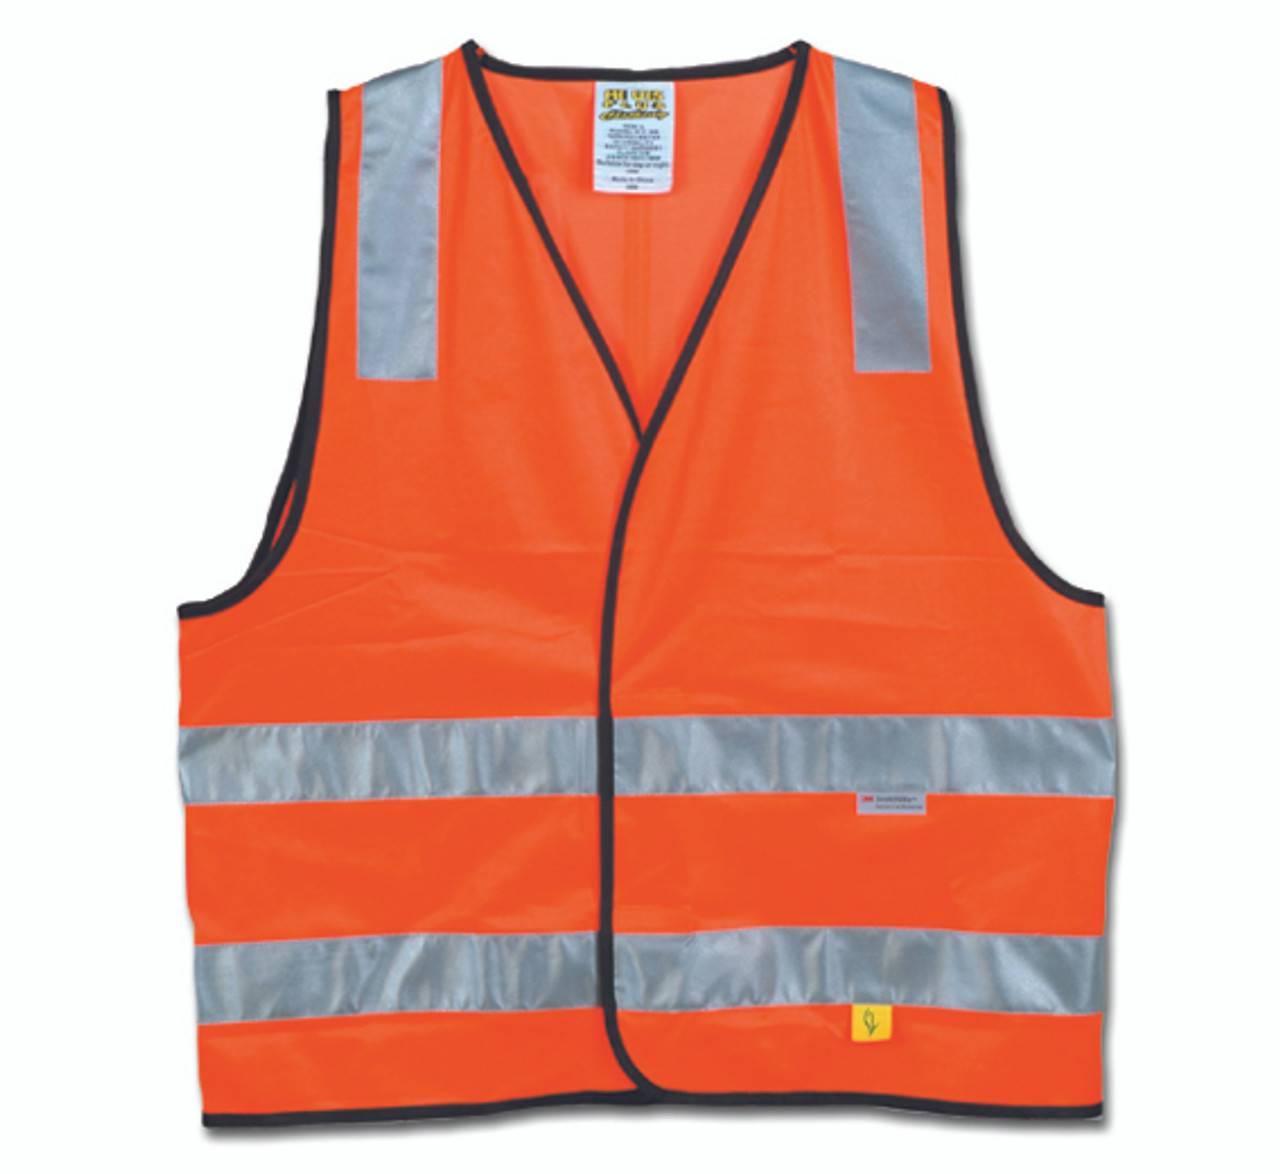 Hi-Vis Orange Safety Vest - Day/Night Use - Medium